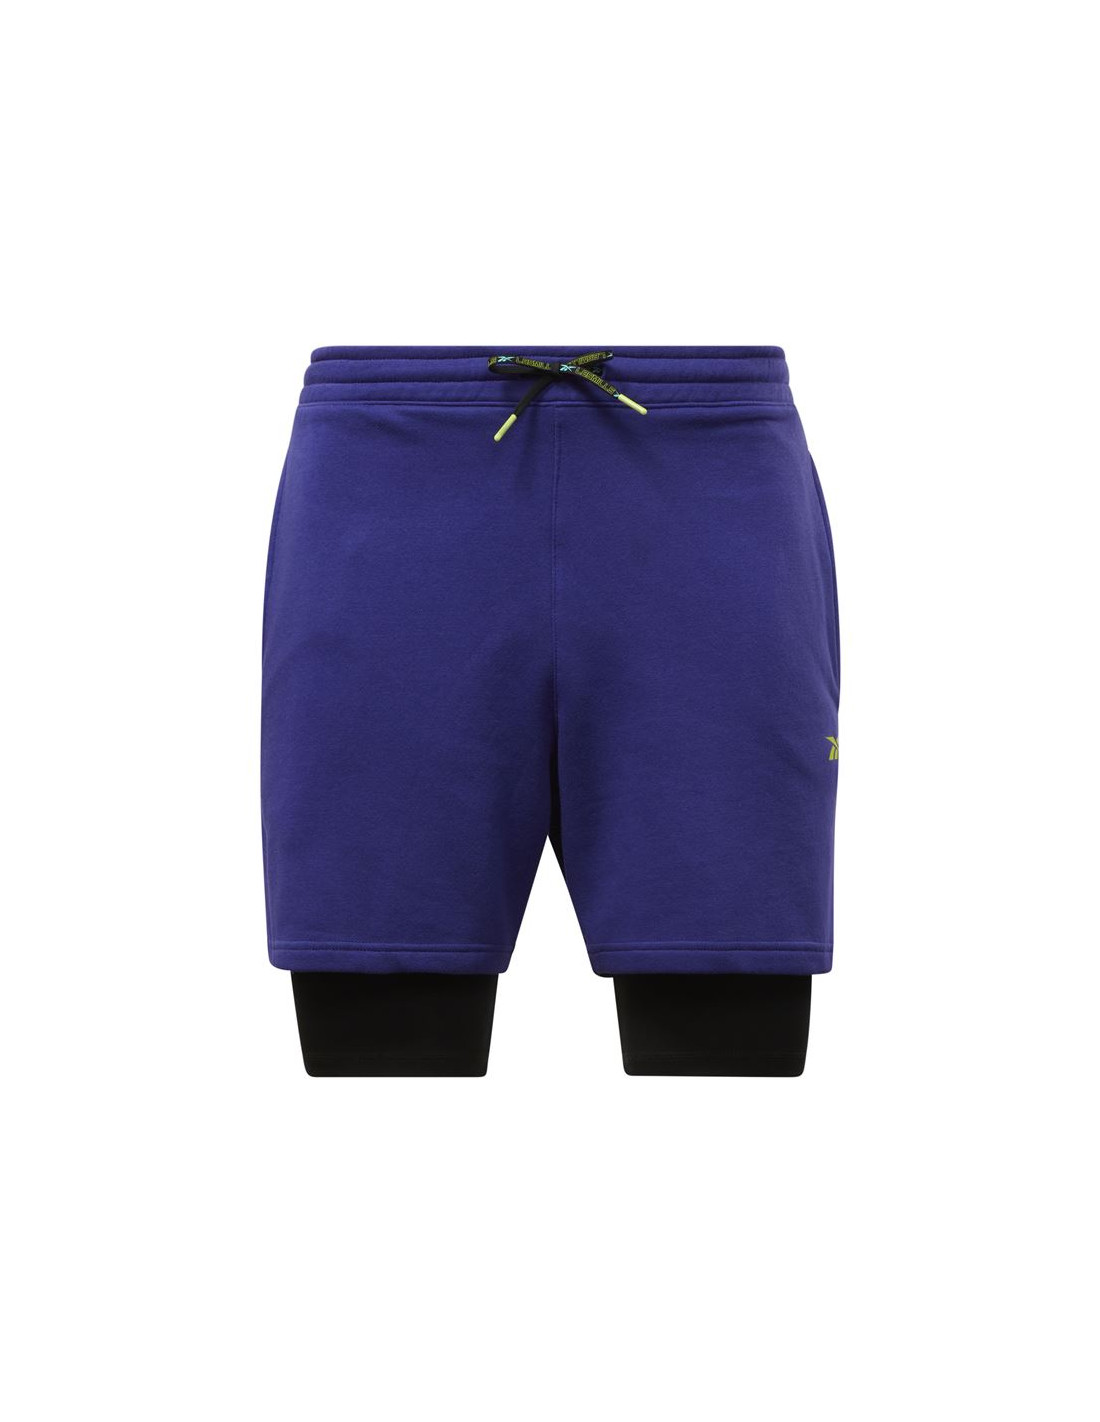 Pantalones cortos reebok les mills® hombre purple